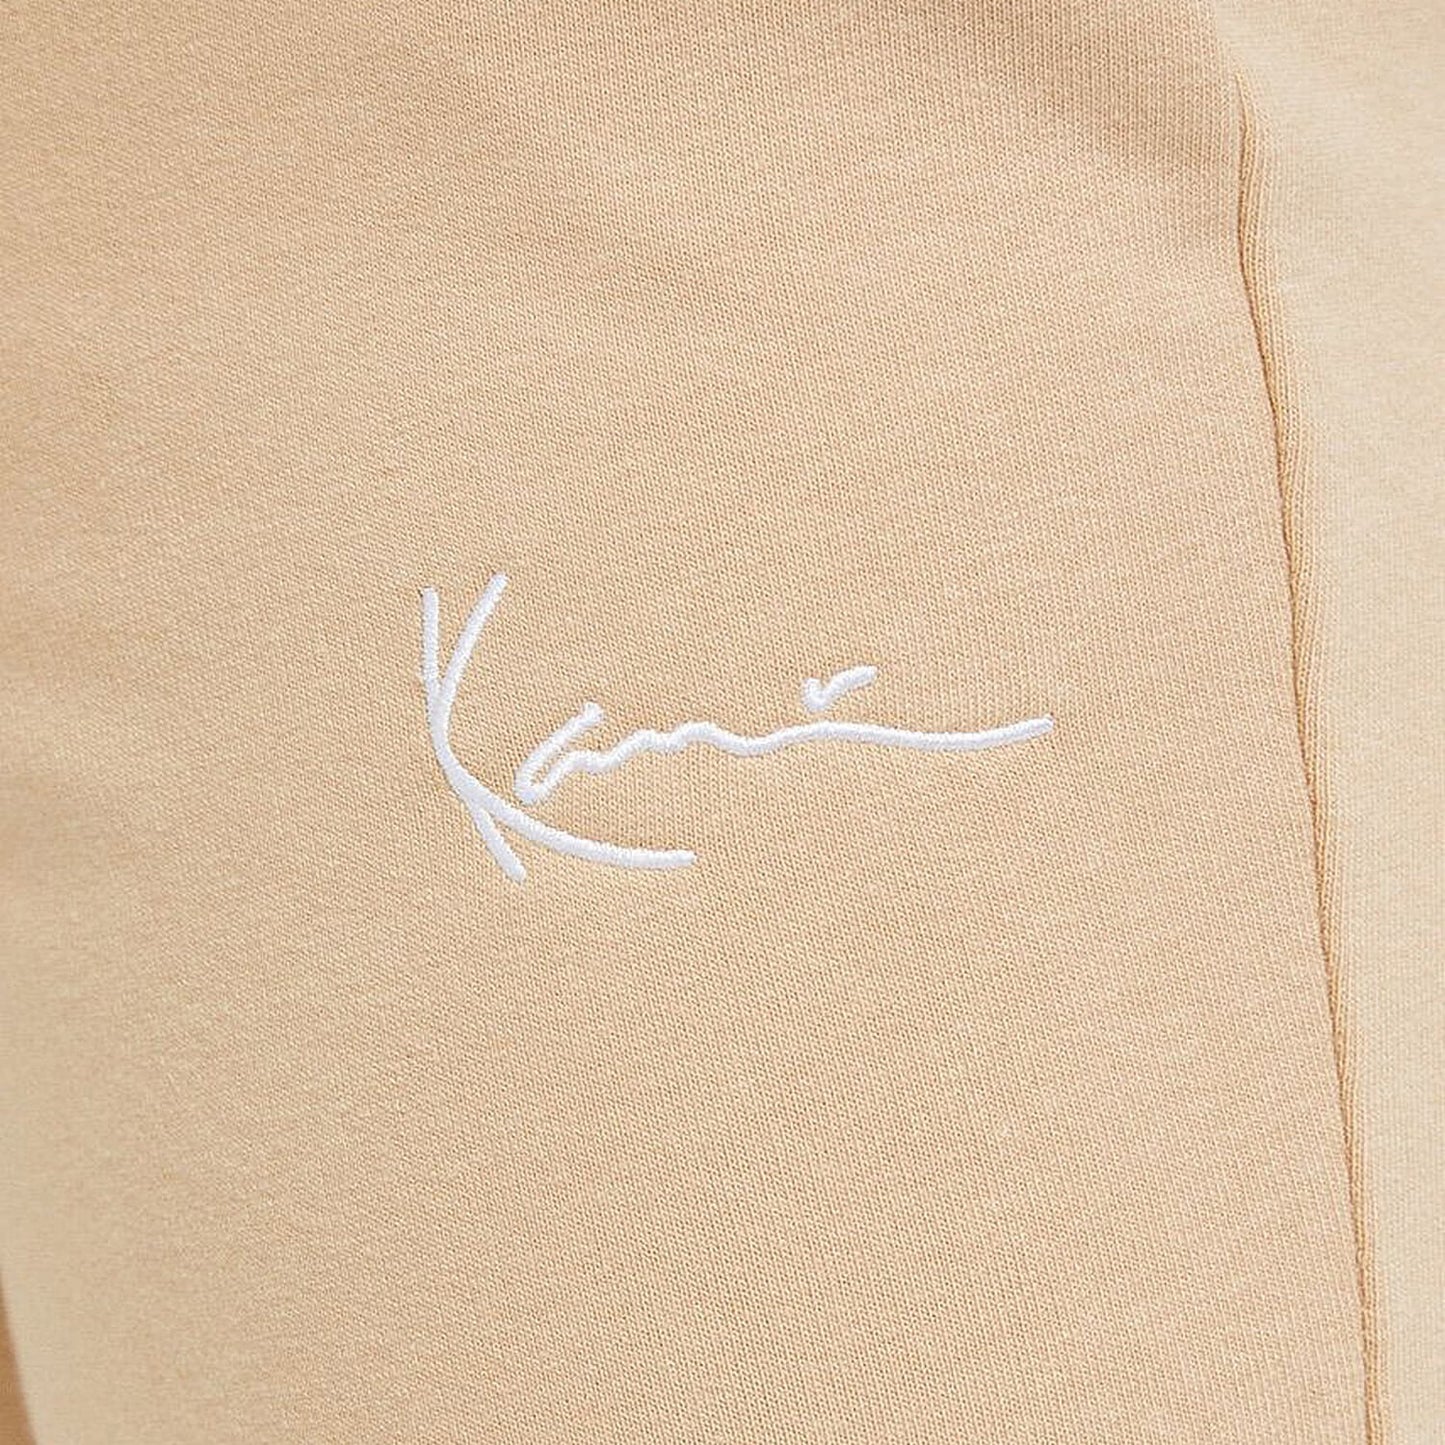 Karl Kani KK Small Signature Flared Leggings beige